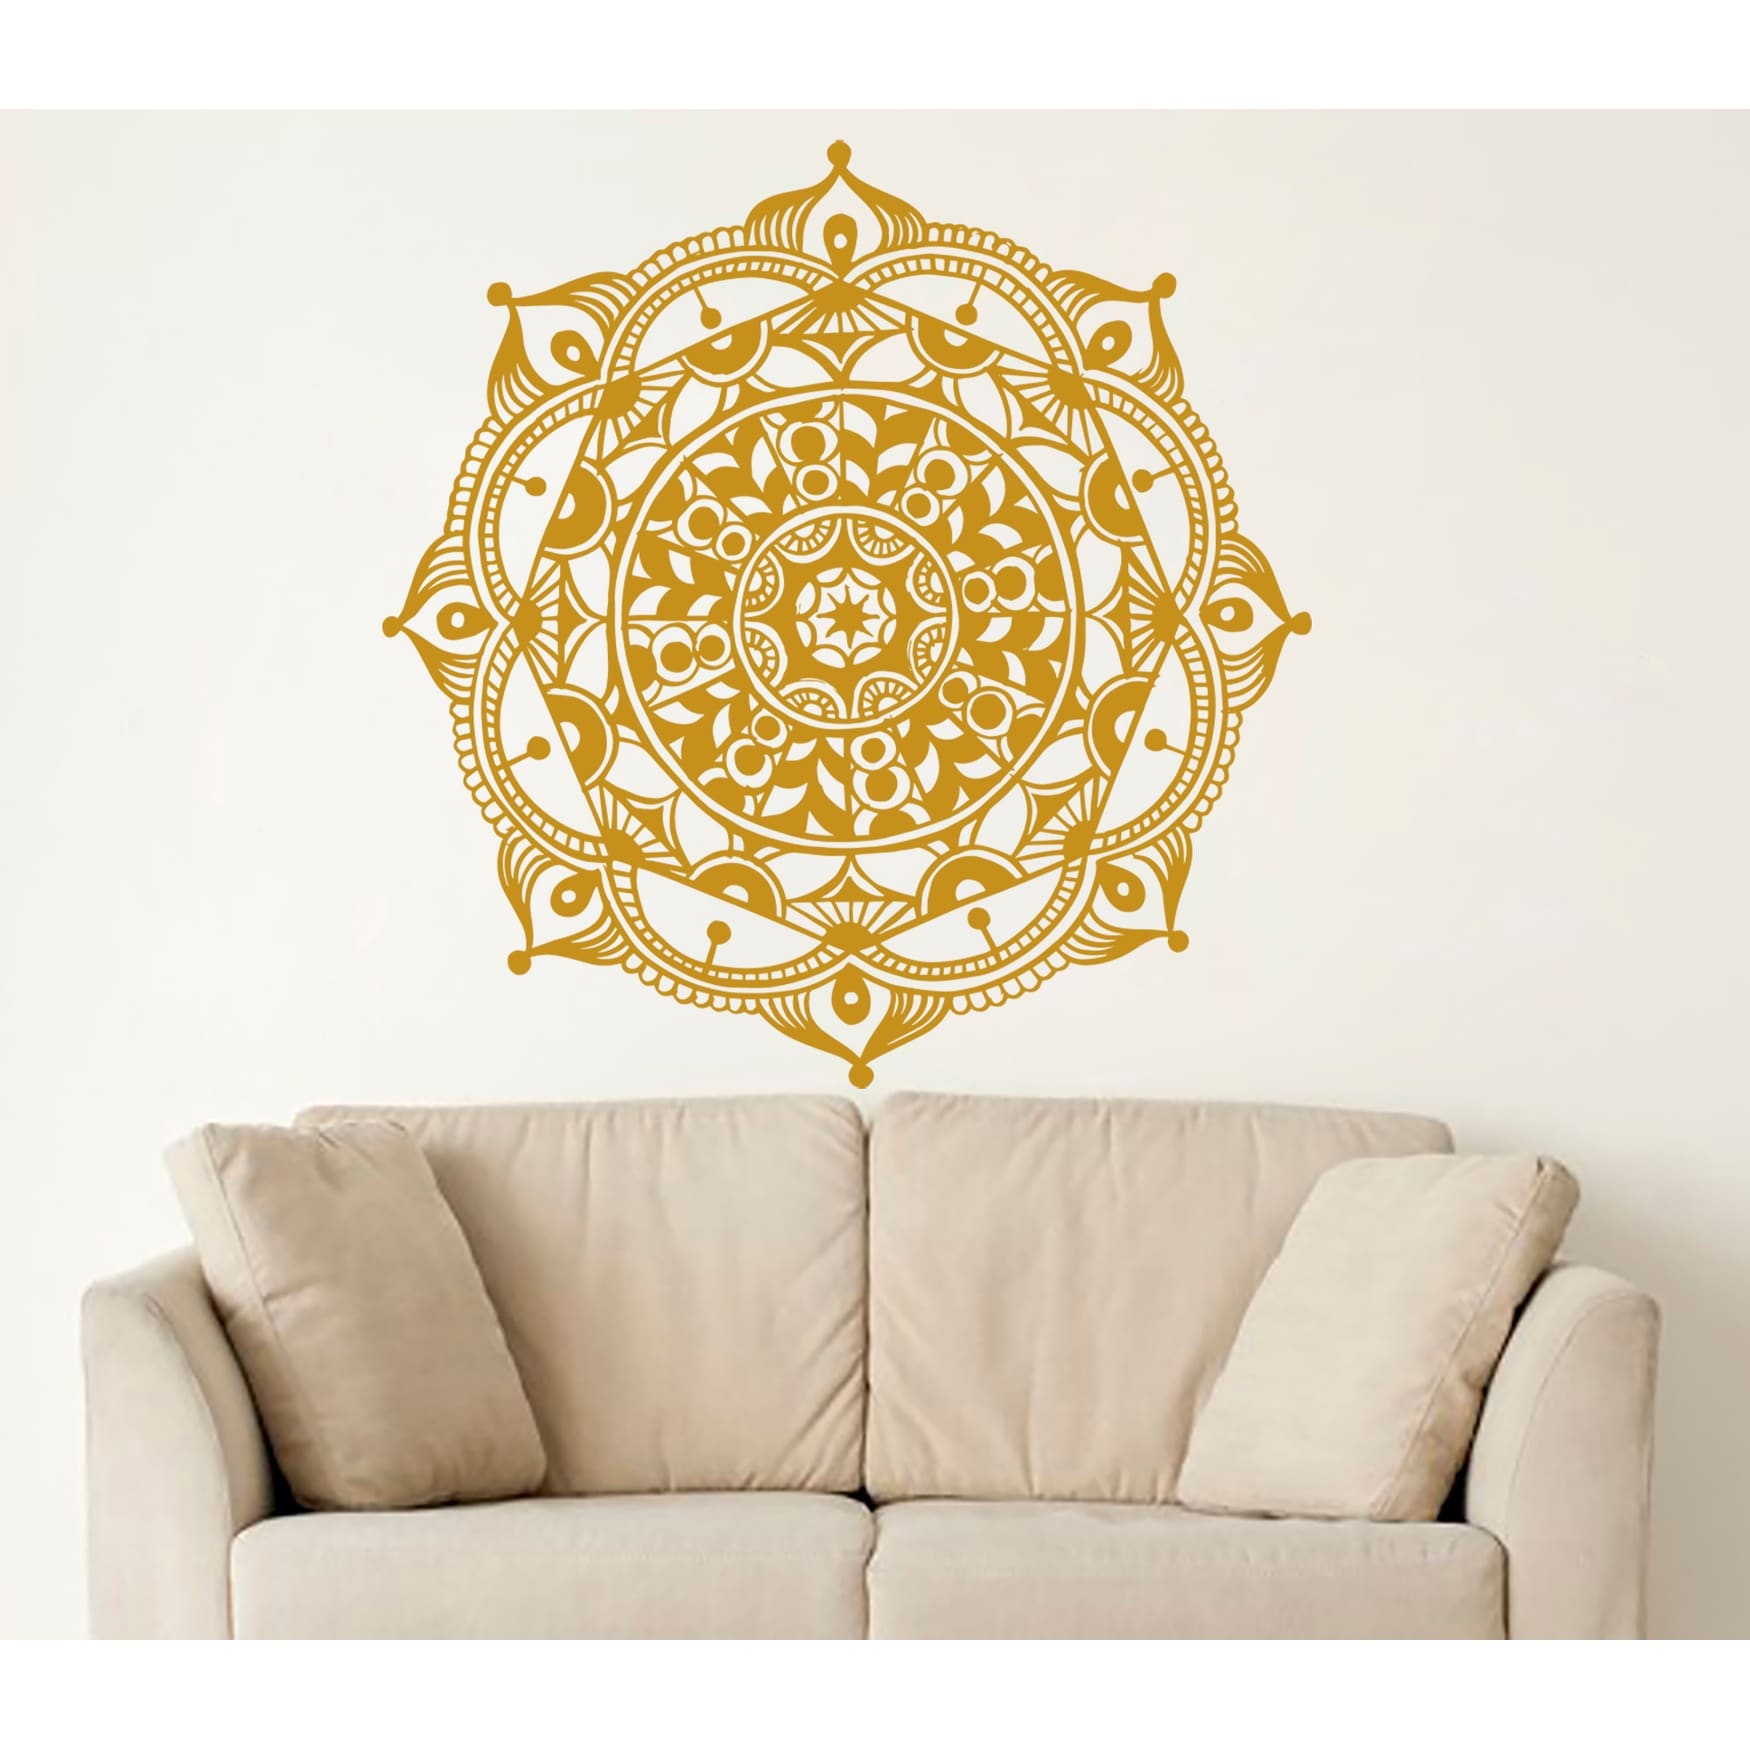 Details about   Wall Wallpapers Mandala Vinyl Decal Meditation Decoration Large Flower Bedroom